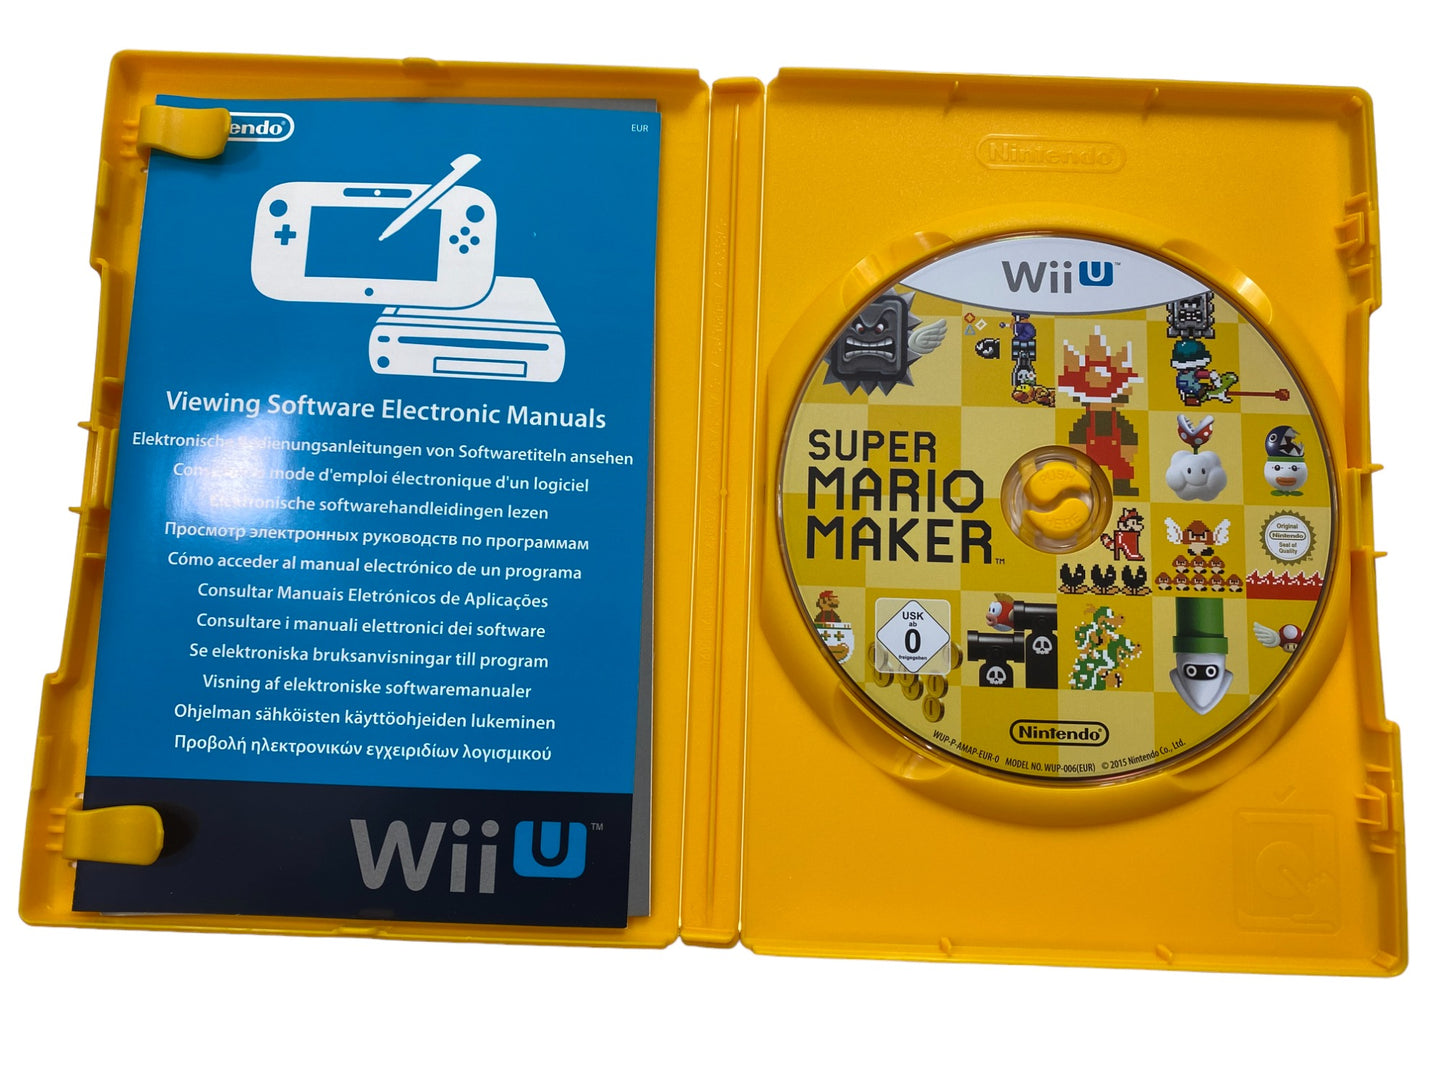 Super Mario Maker - Nintendo Wii U inkl. Buch (CD KRATZFREI)